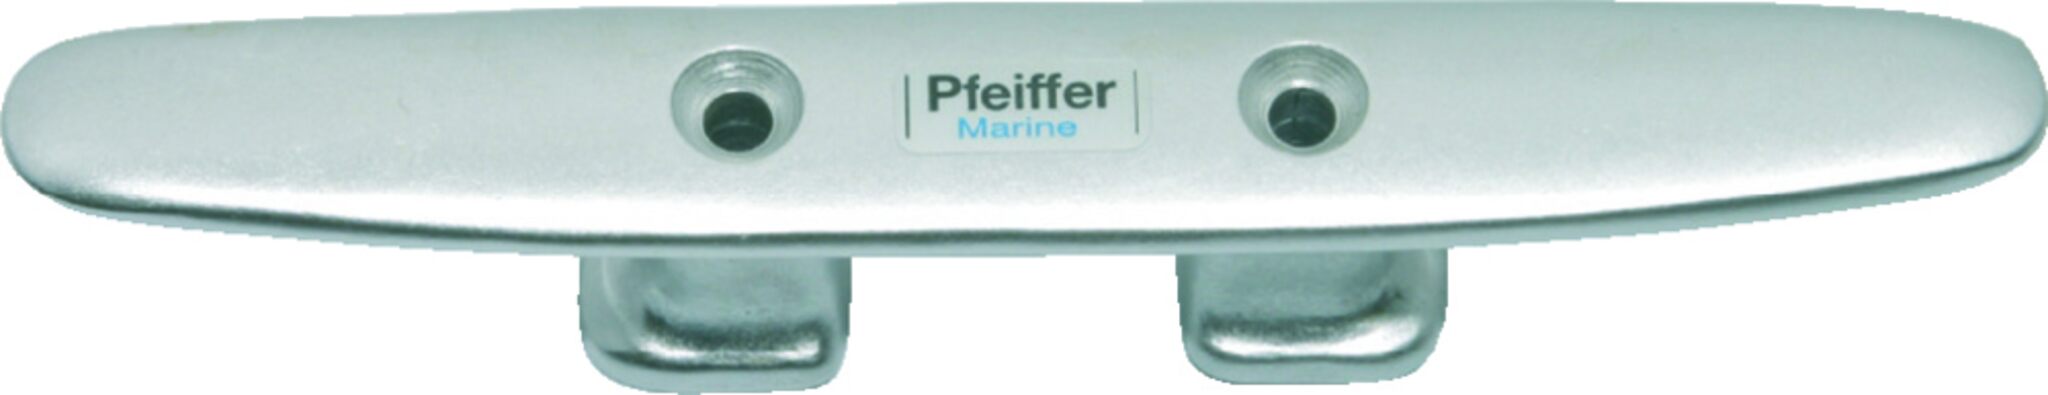 Pfeiffer aluminum cleat, narrow base